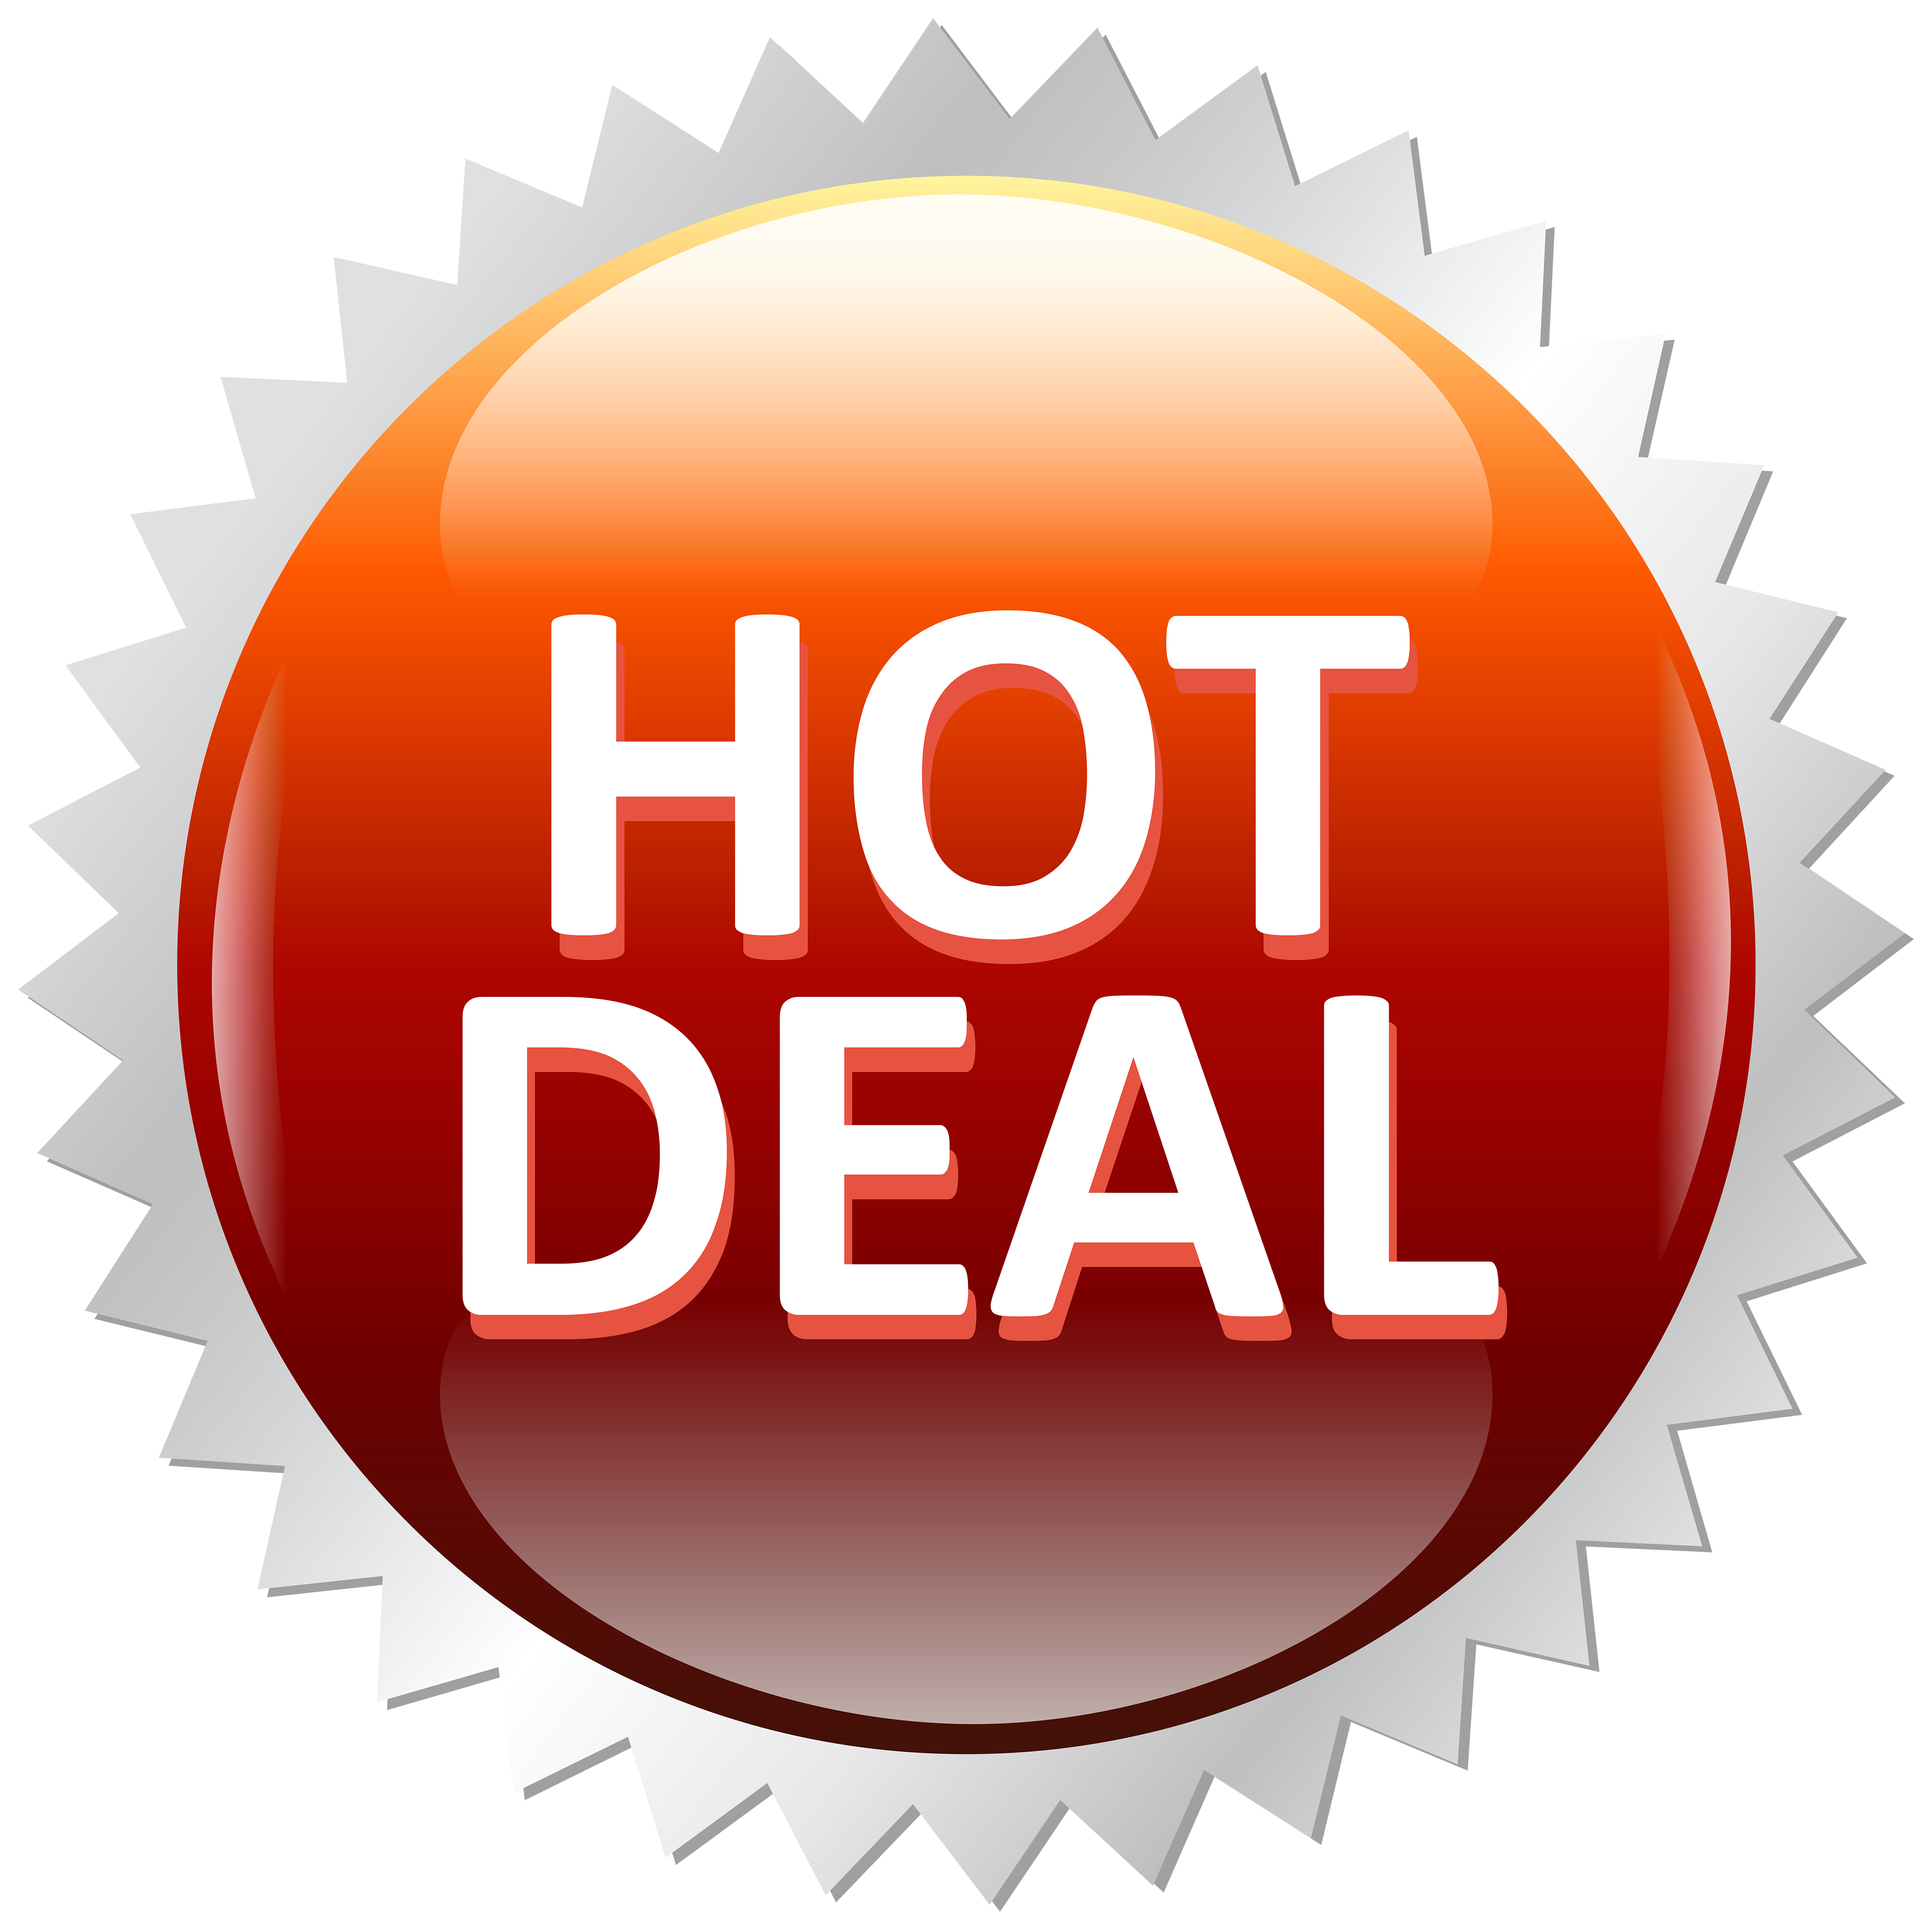 Hot Deal Sale Label PNG Clip Art Image 